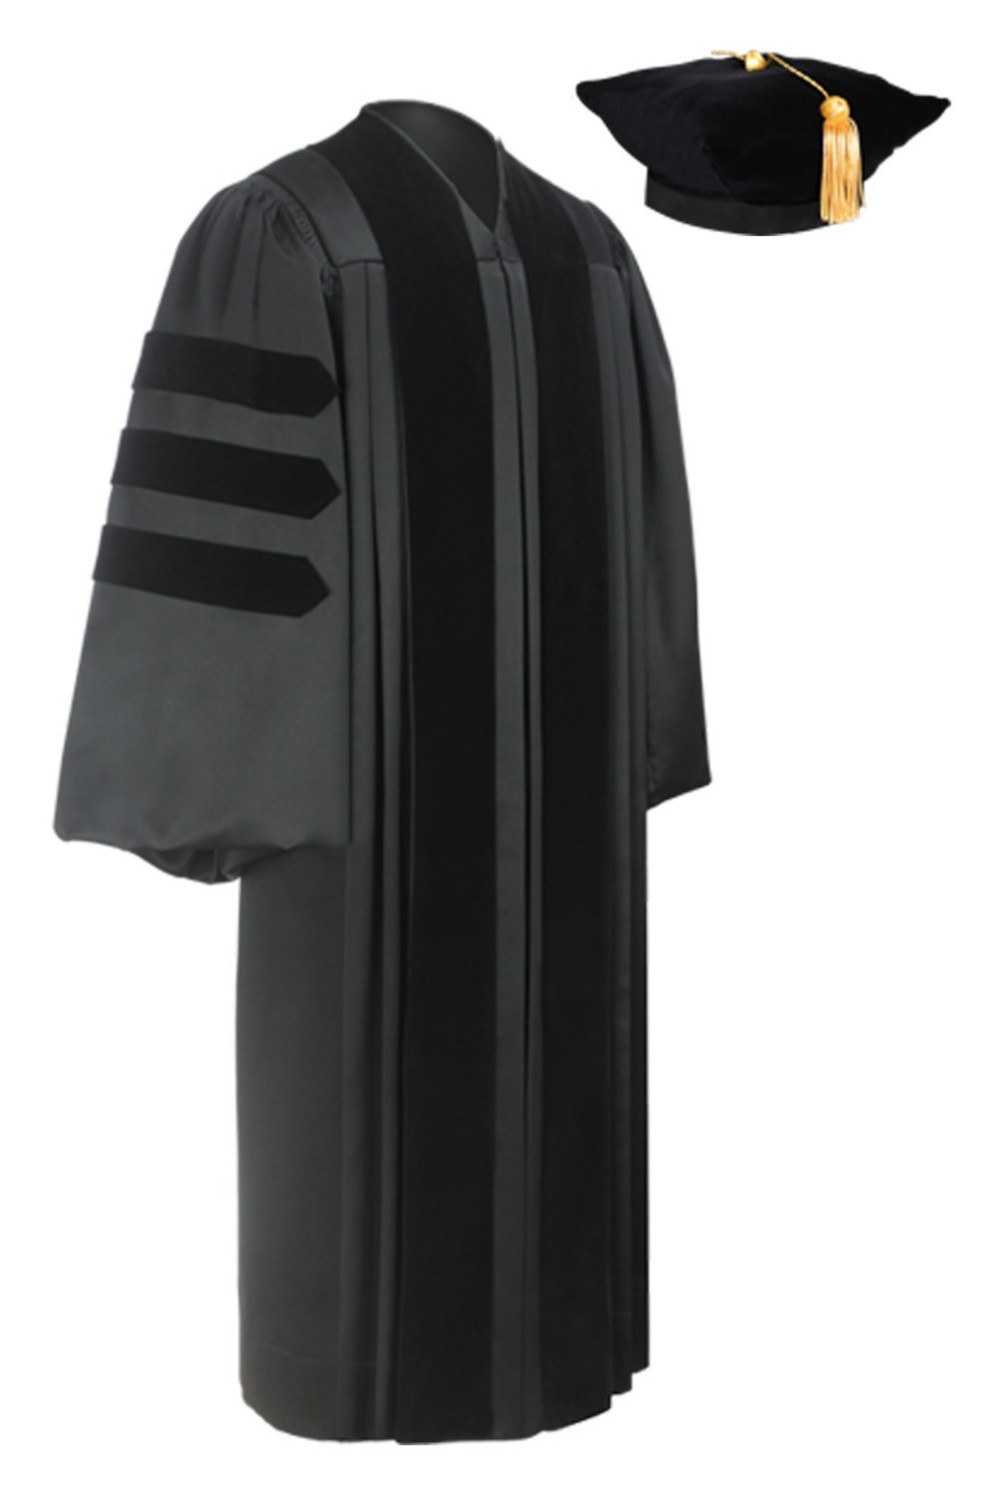 doctoral gown tam.jpg